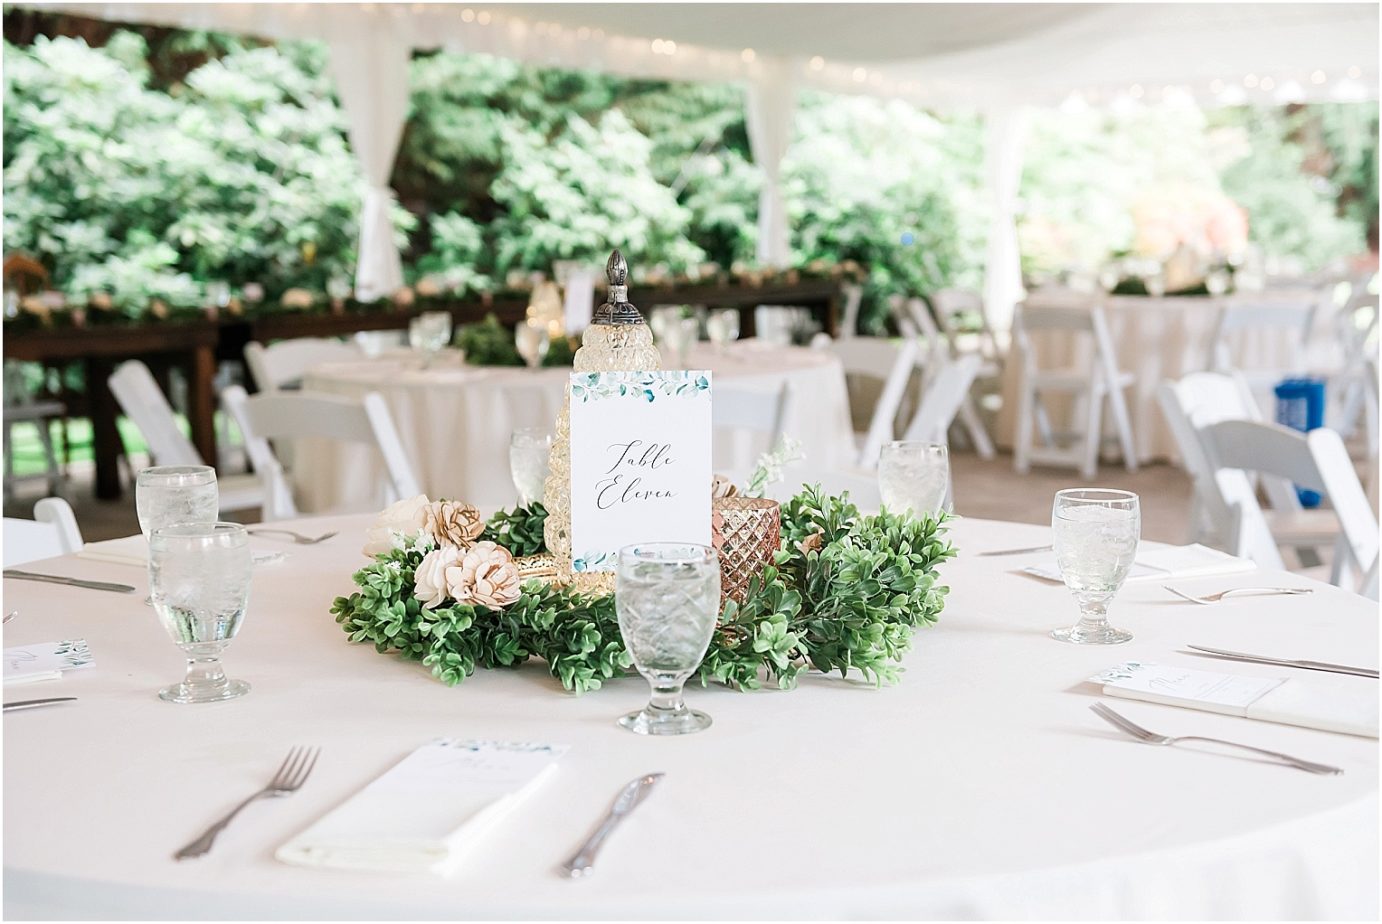 Laurel Creek Manor Wedding reception details